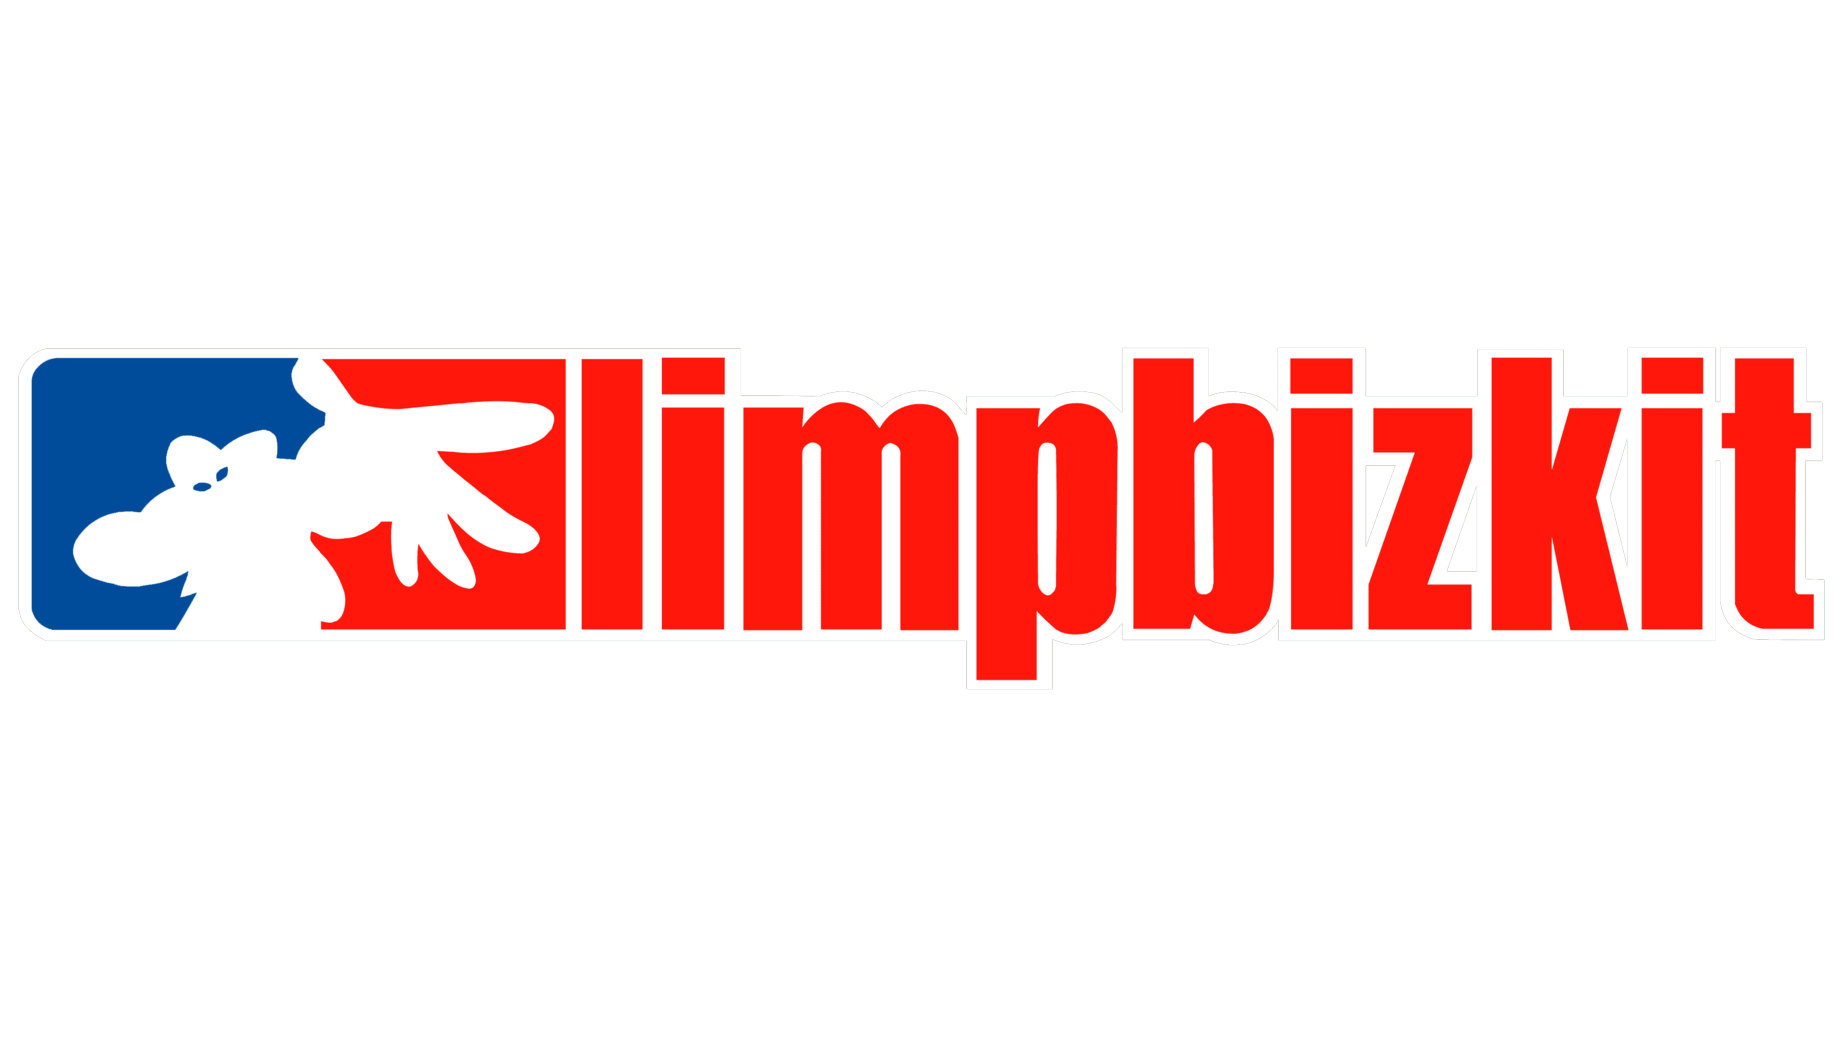 Limp bizkit sign